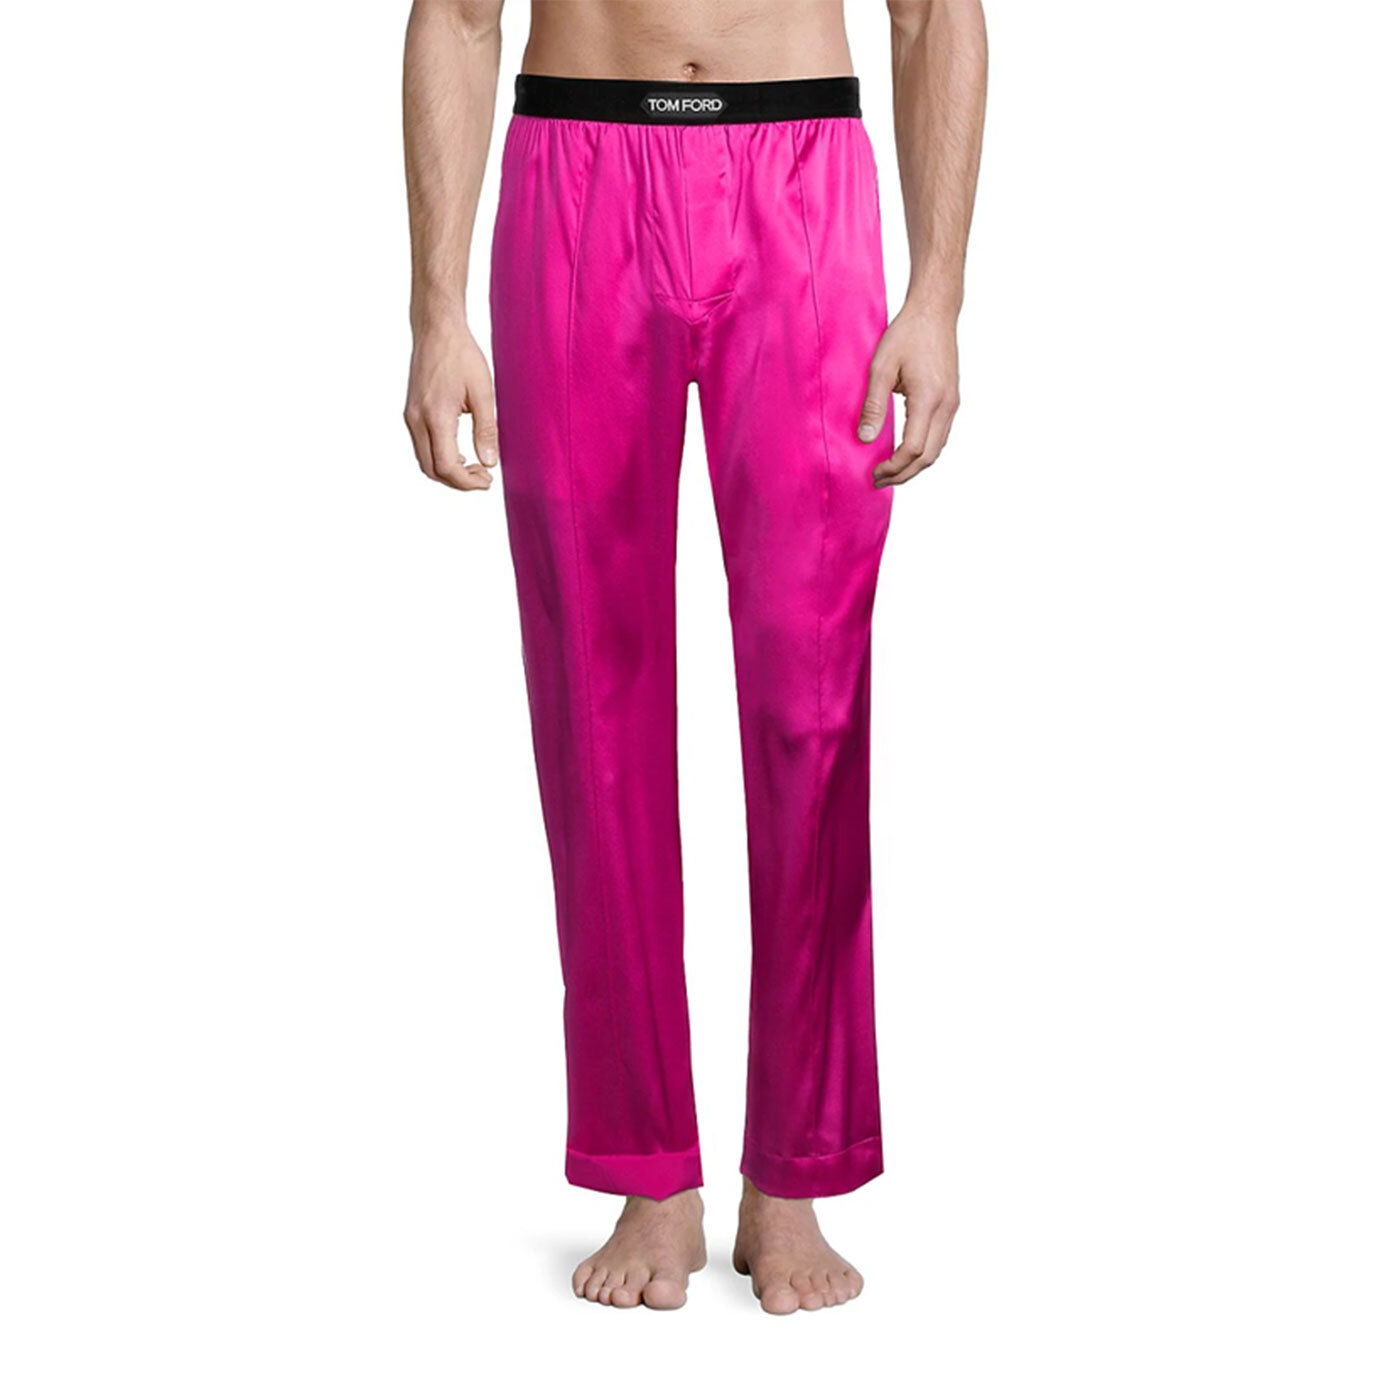 tom-ford-stretch-silk-pajama-pants.jpeg